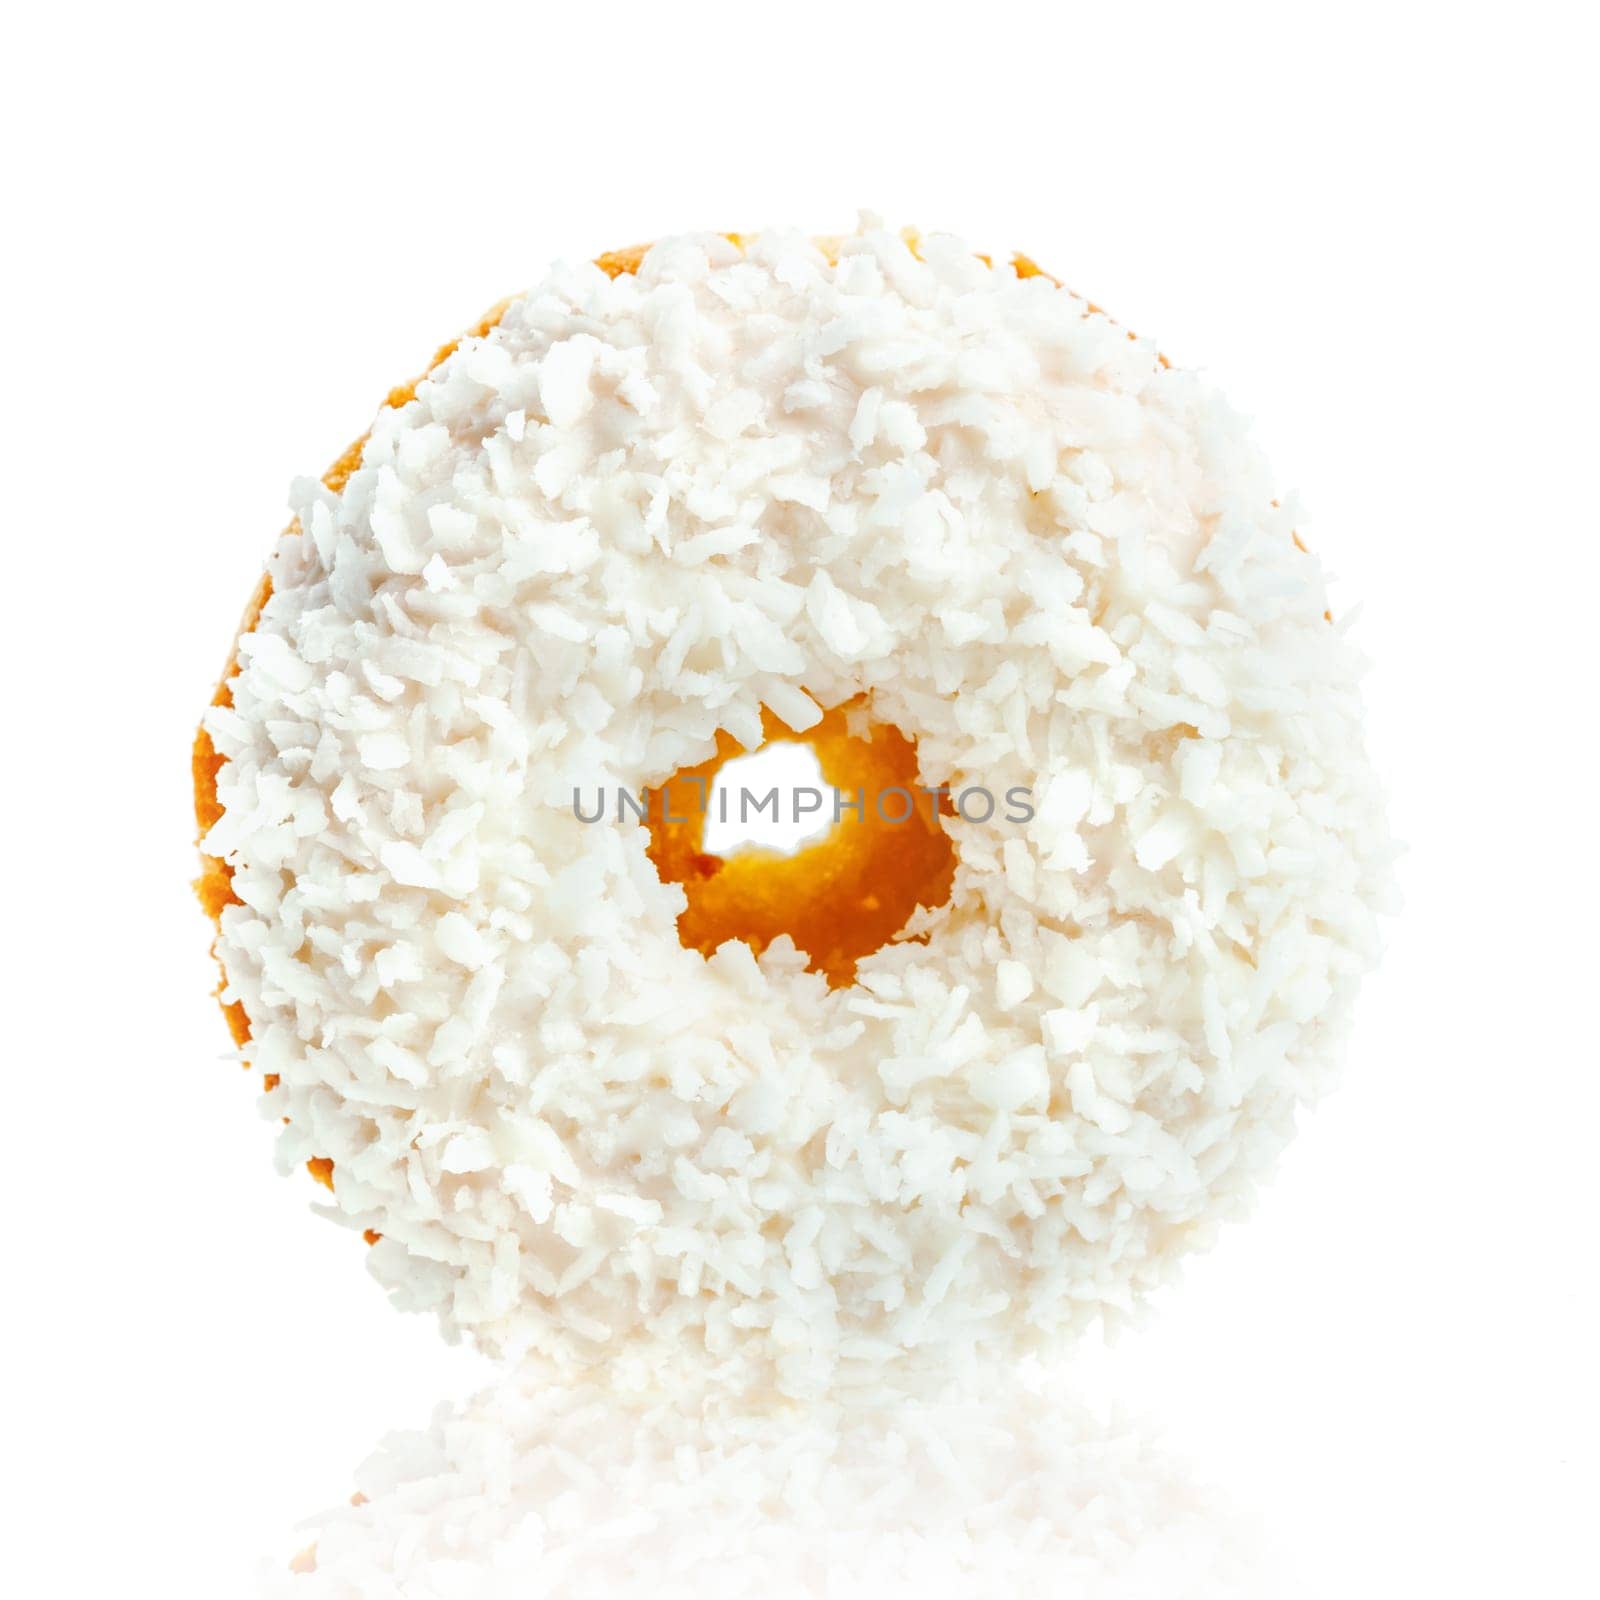 donut isolated on white background by Fabrikasimf